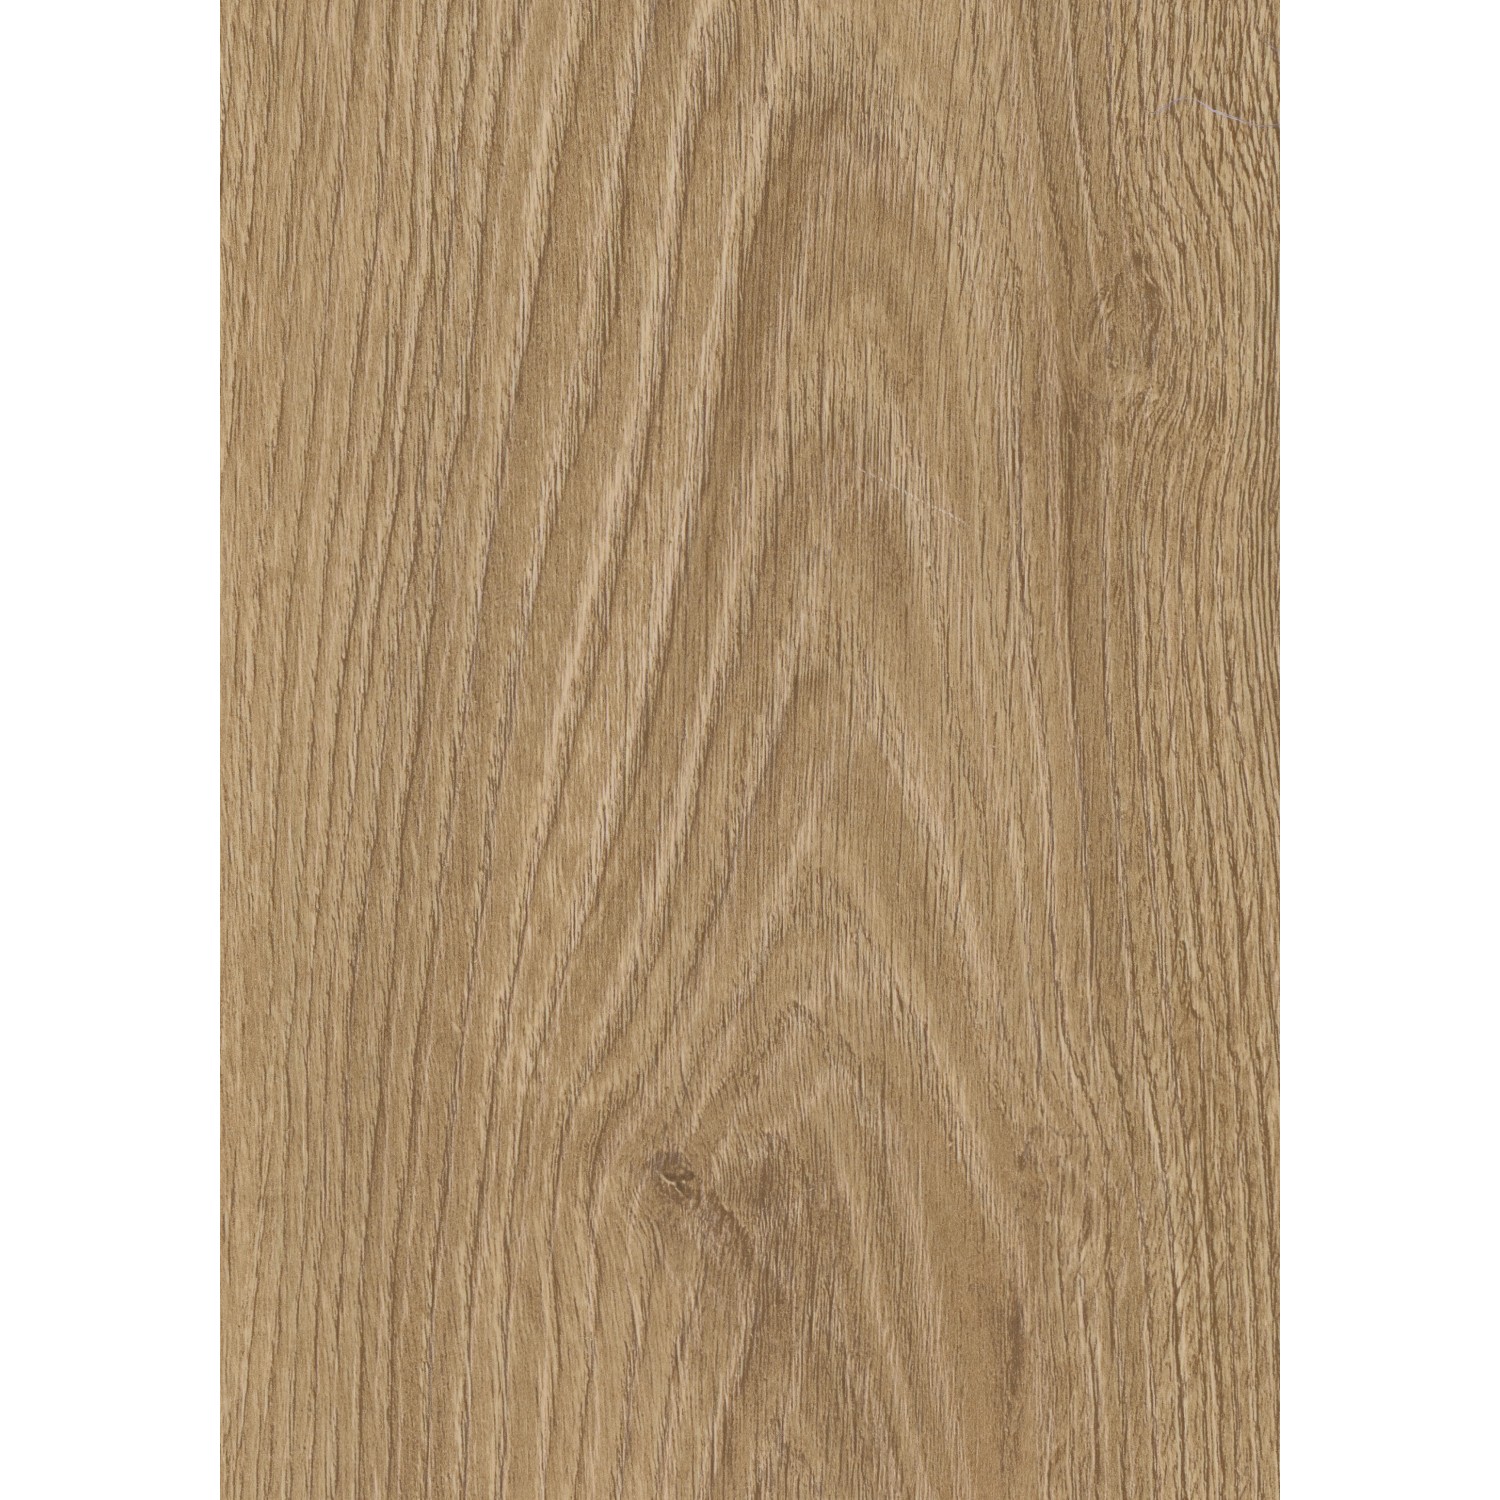 Kronoflooring Laminatbodenmuster Saxon Character Natural Carpenter Oak von Kronoflooring